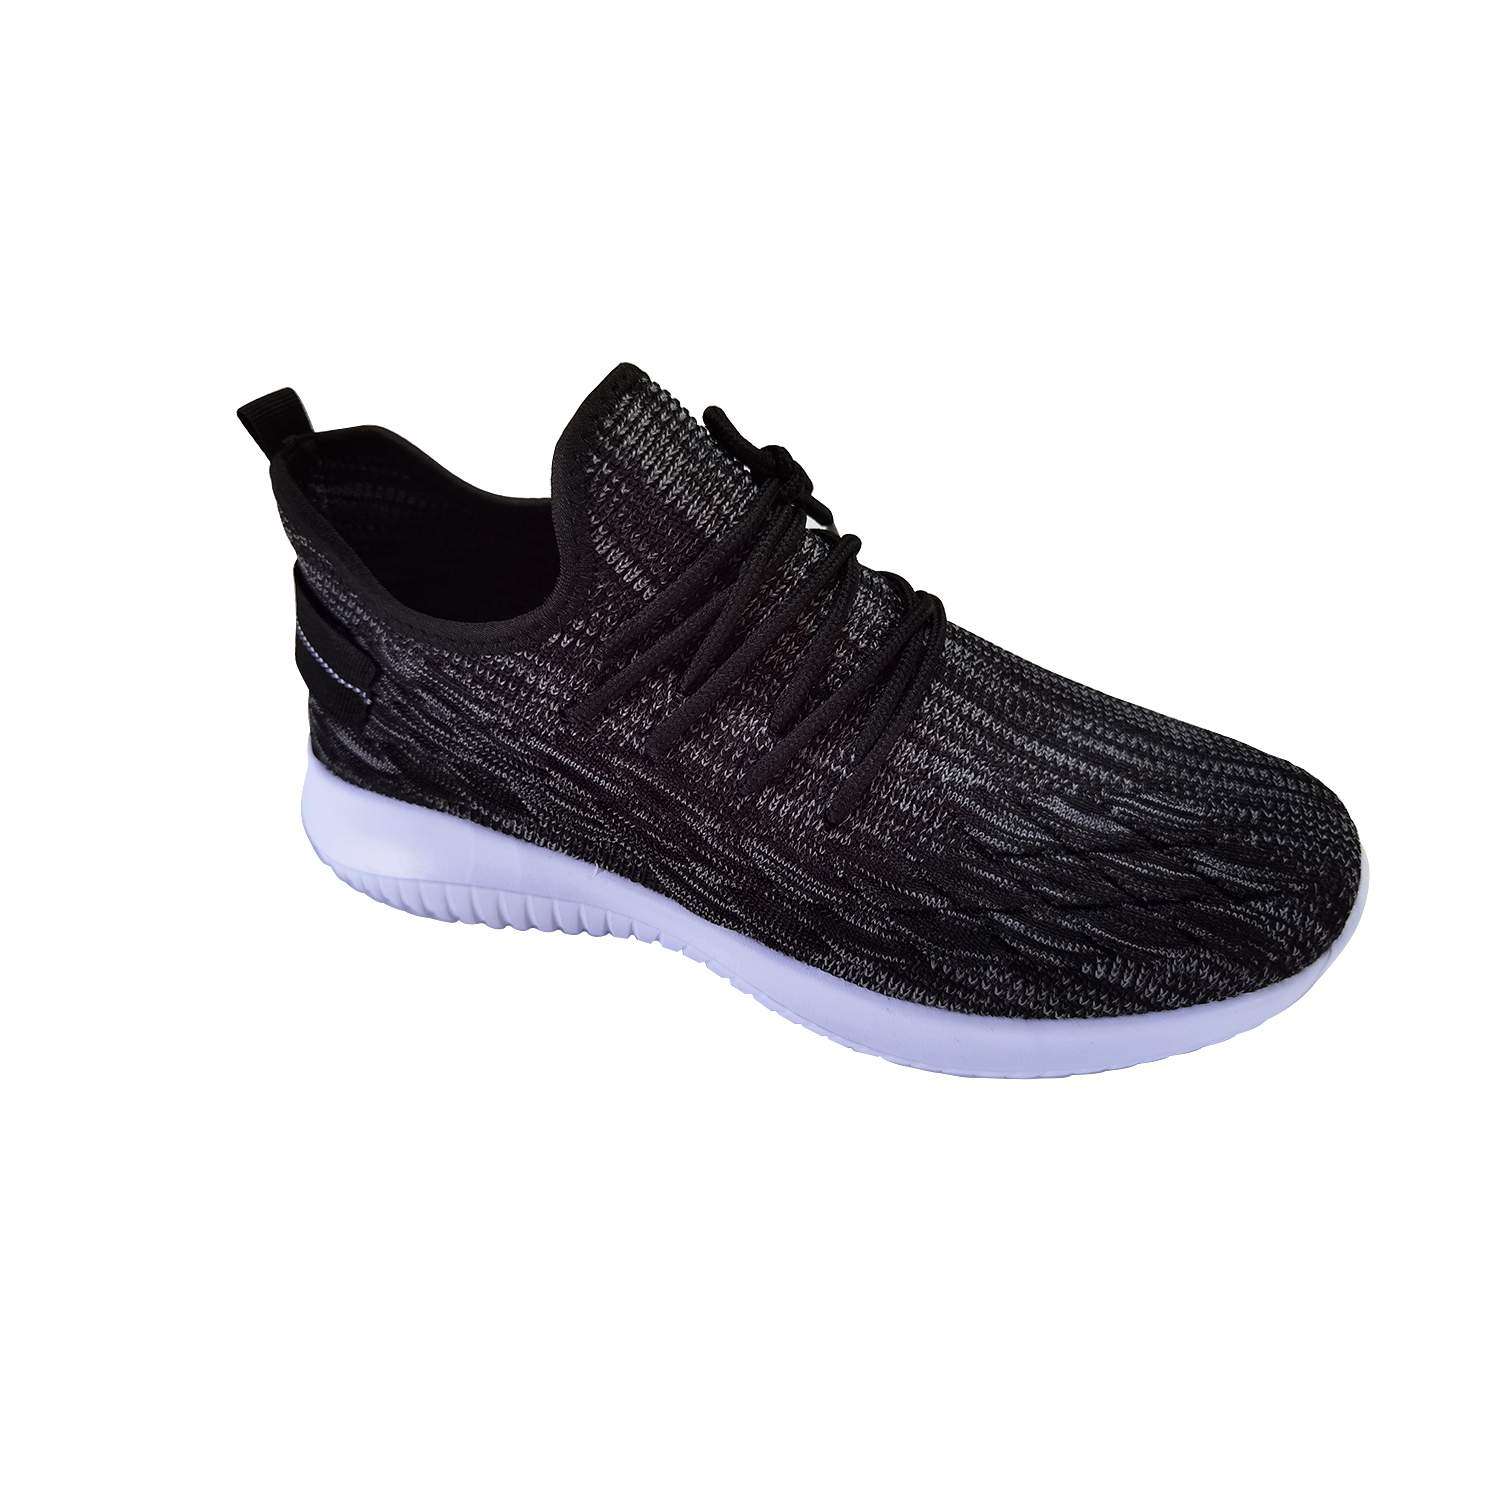 Men's Black Fly Knitted Breathable Sneaker